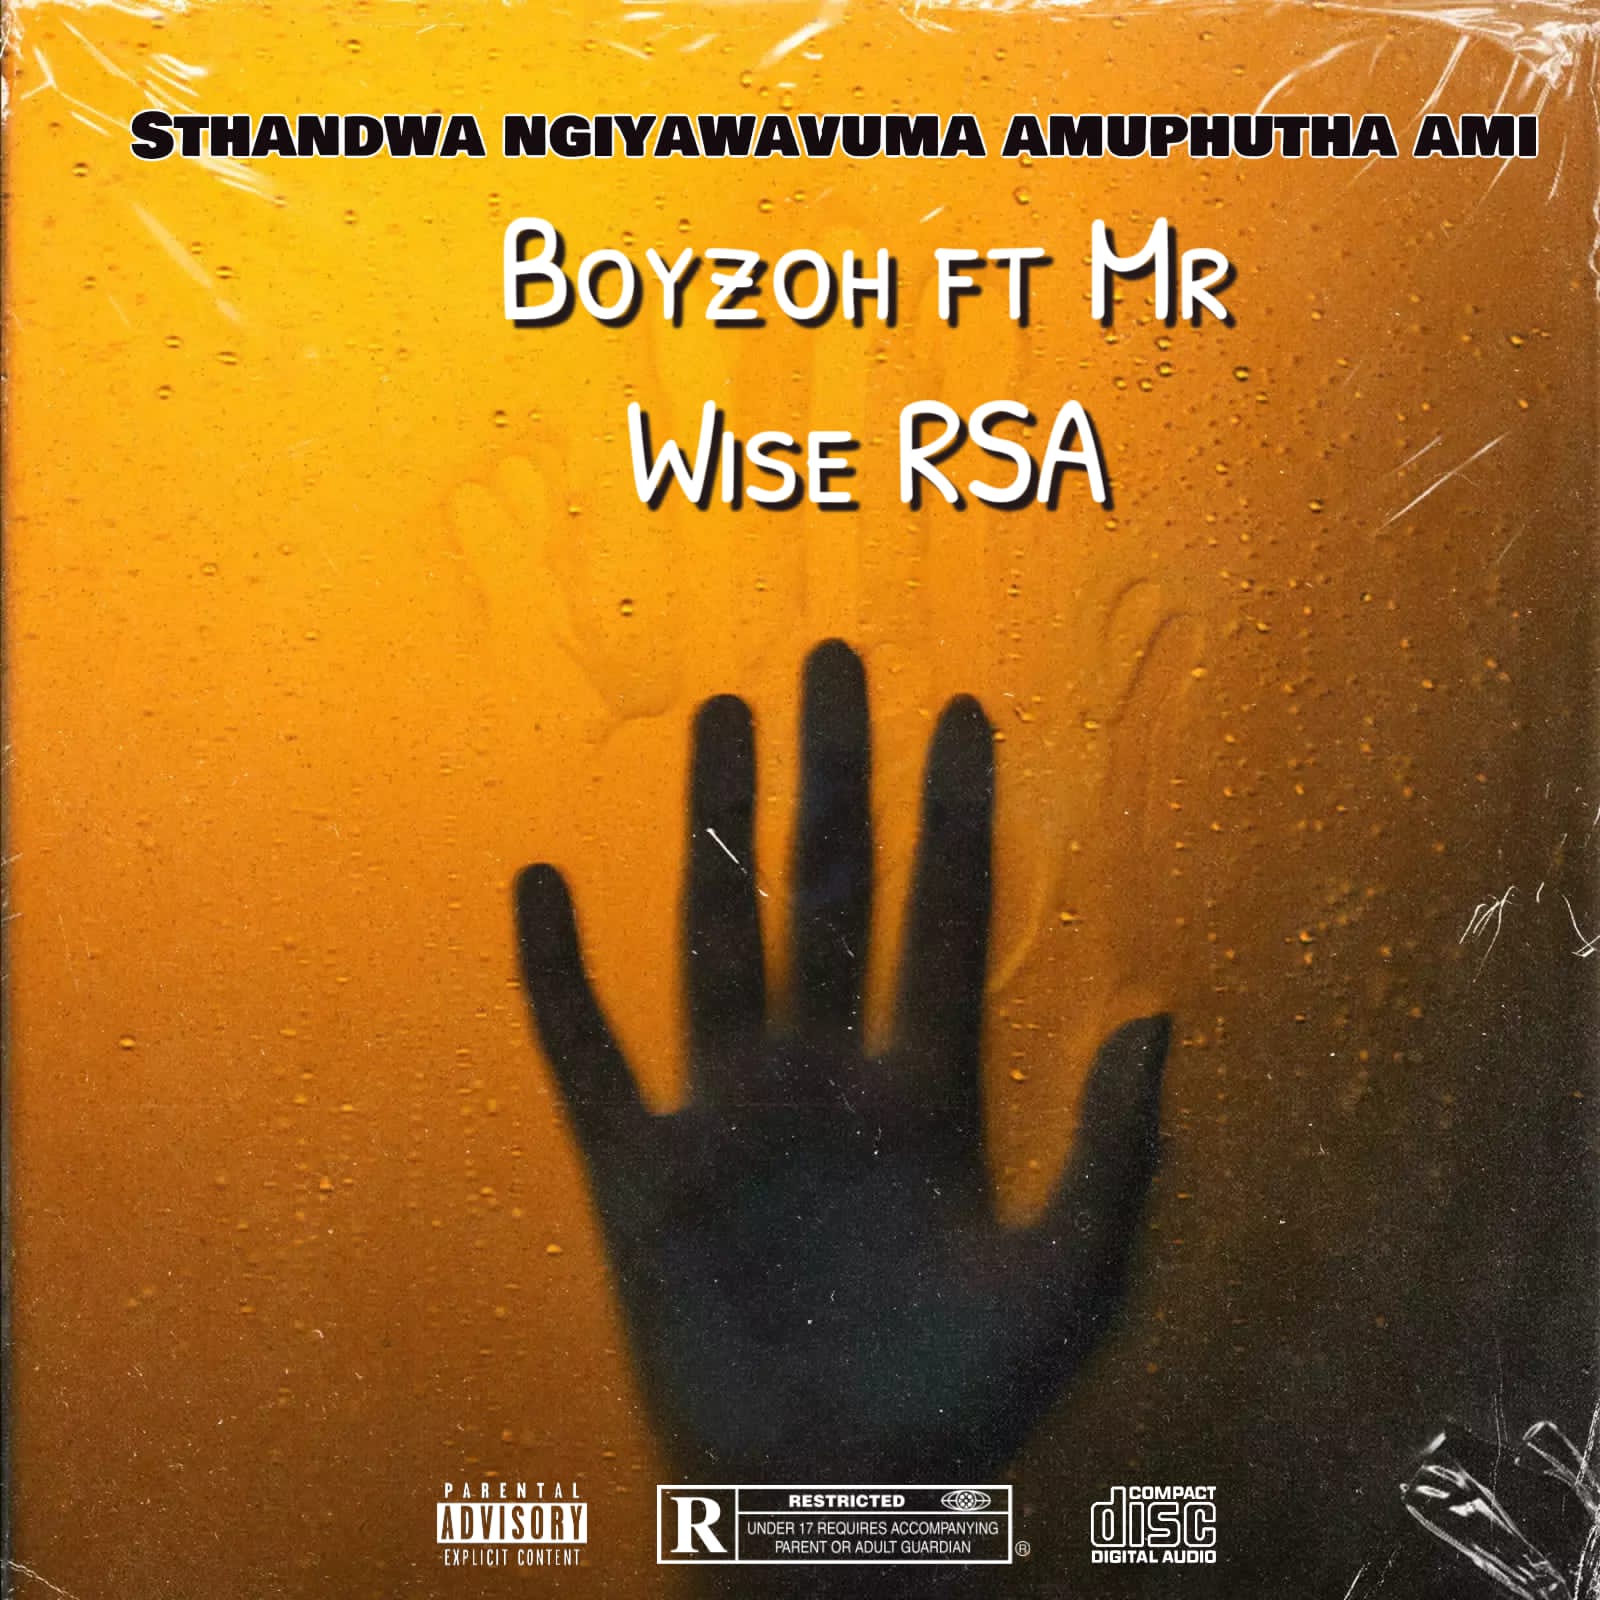 Ngiyawavuma amaphutha ami - (Boyzoh ft Mr Wise Rsa) ft Black-tee